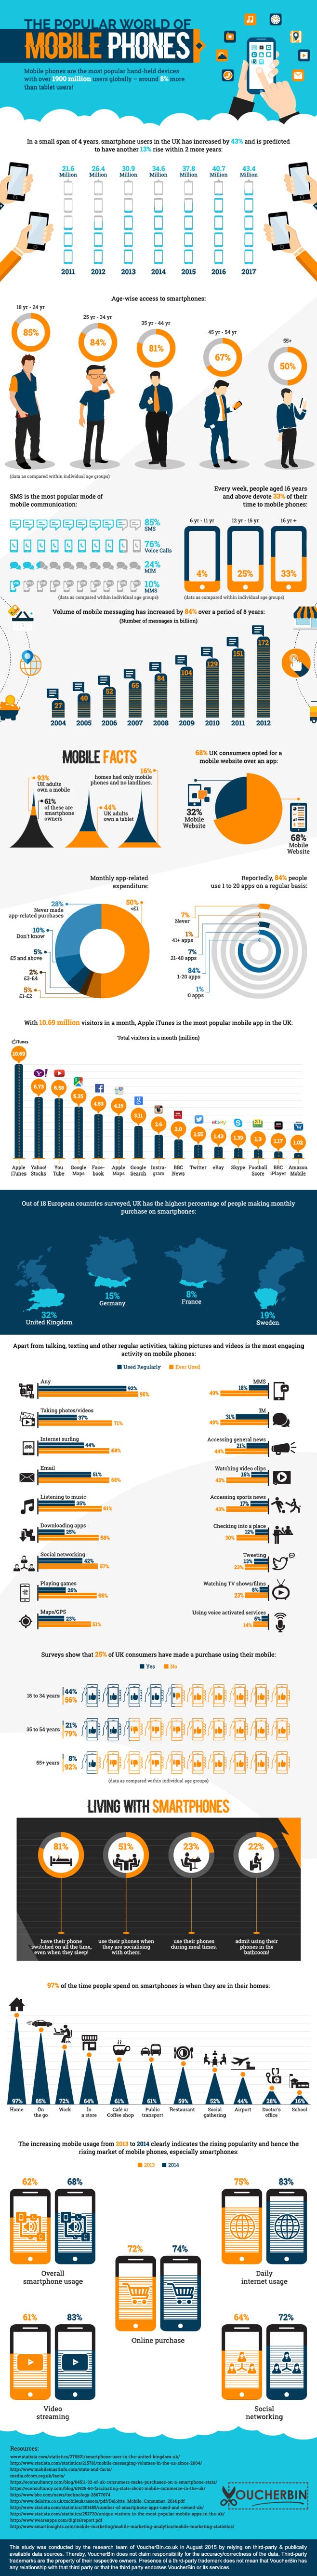 voucherbin-infographic-the-popular-world-of-mobile-phones